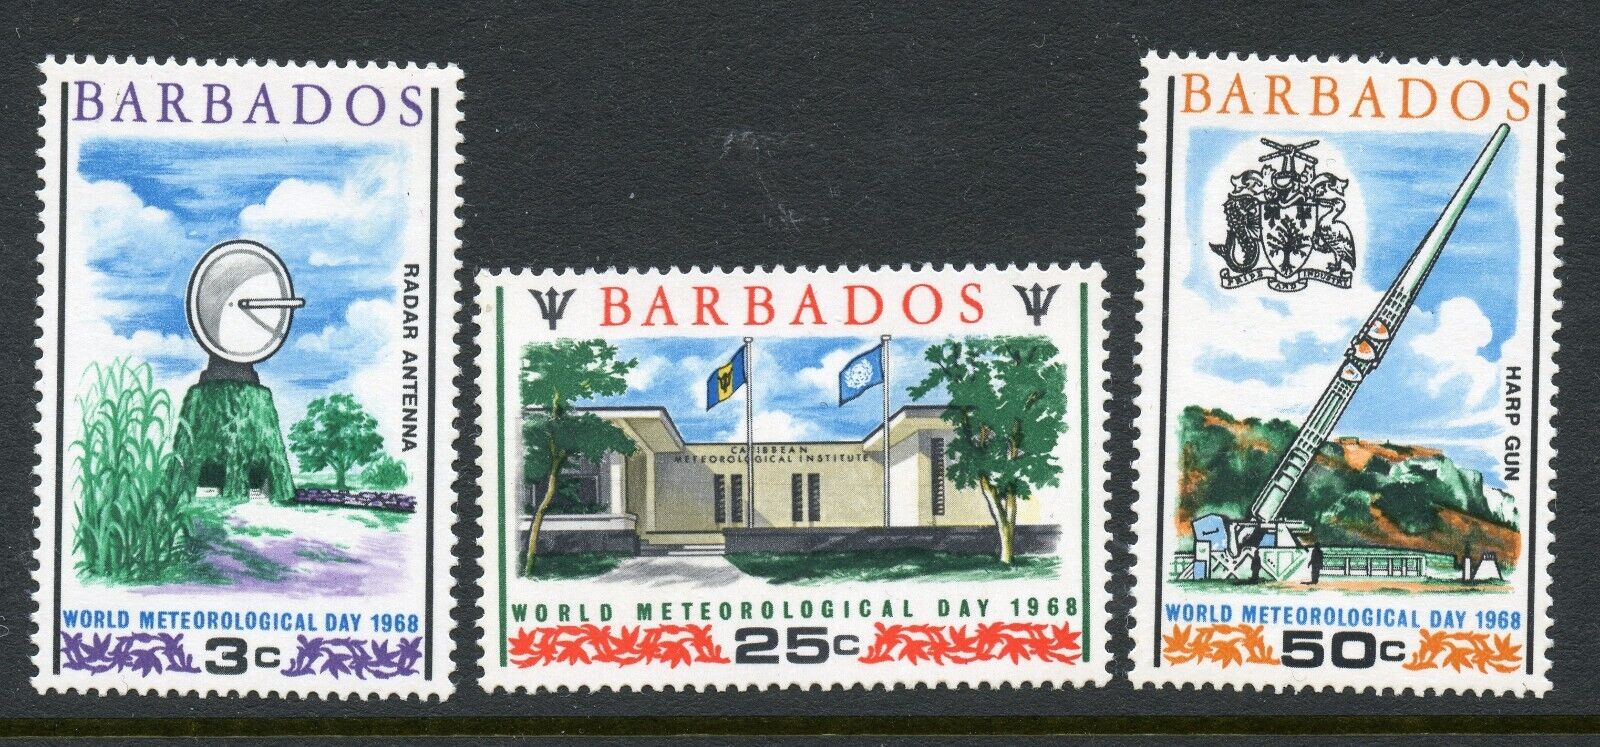 Barbados Scott 303-305 World Meteorological Day Mnh 1968